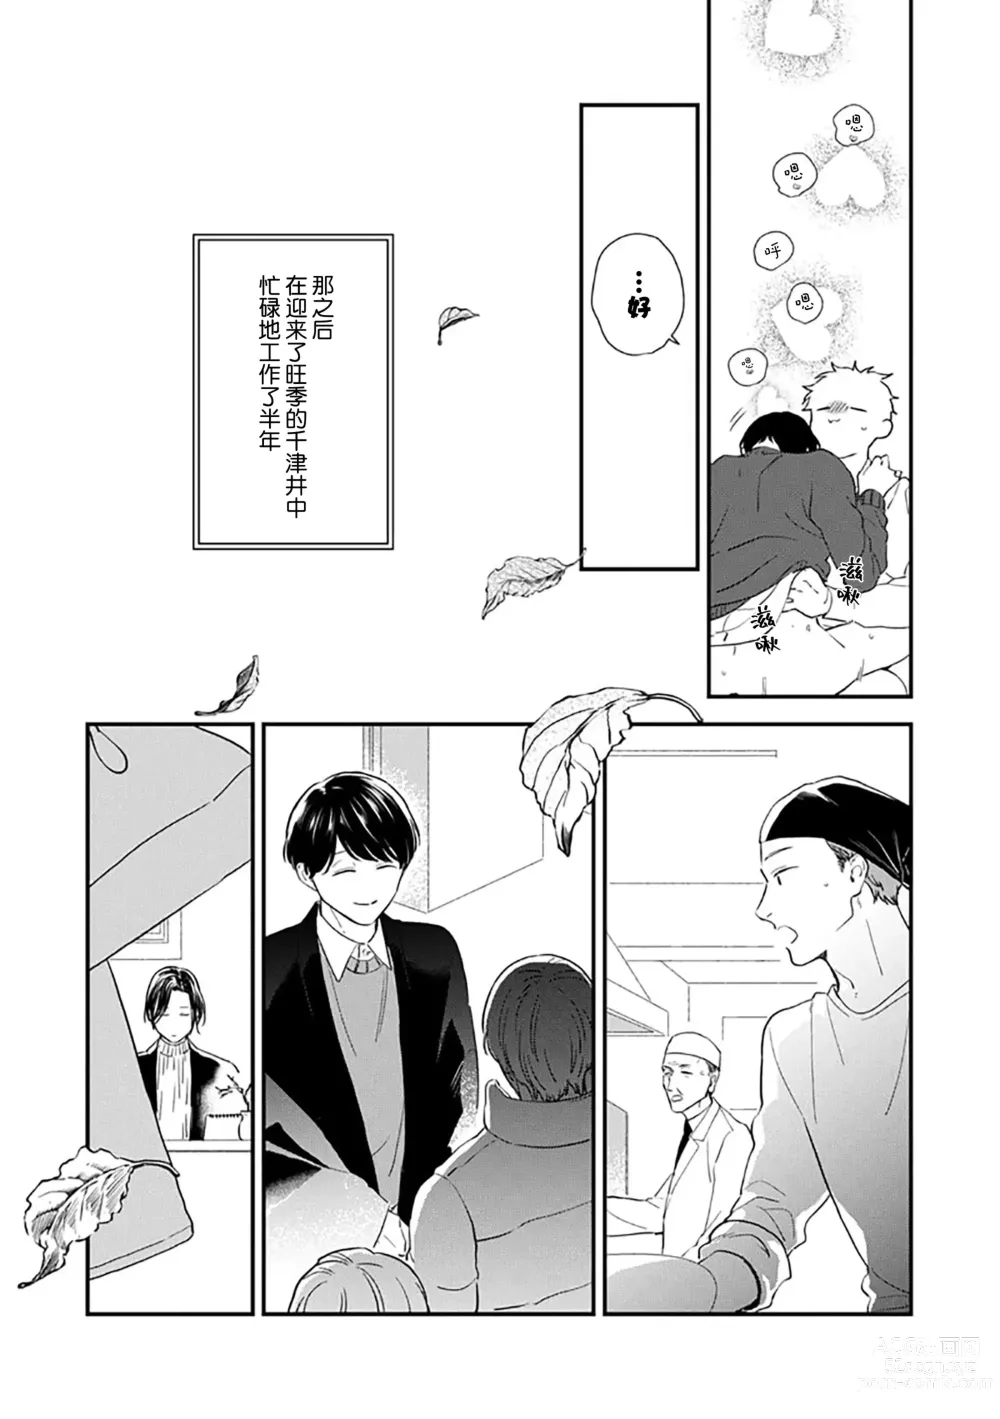 Page 170 of manga 沉溺的良夜与赫尔墨斯